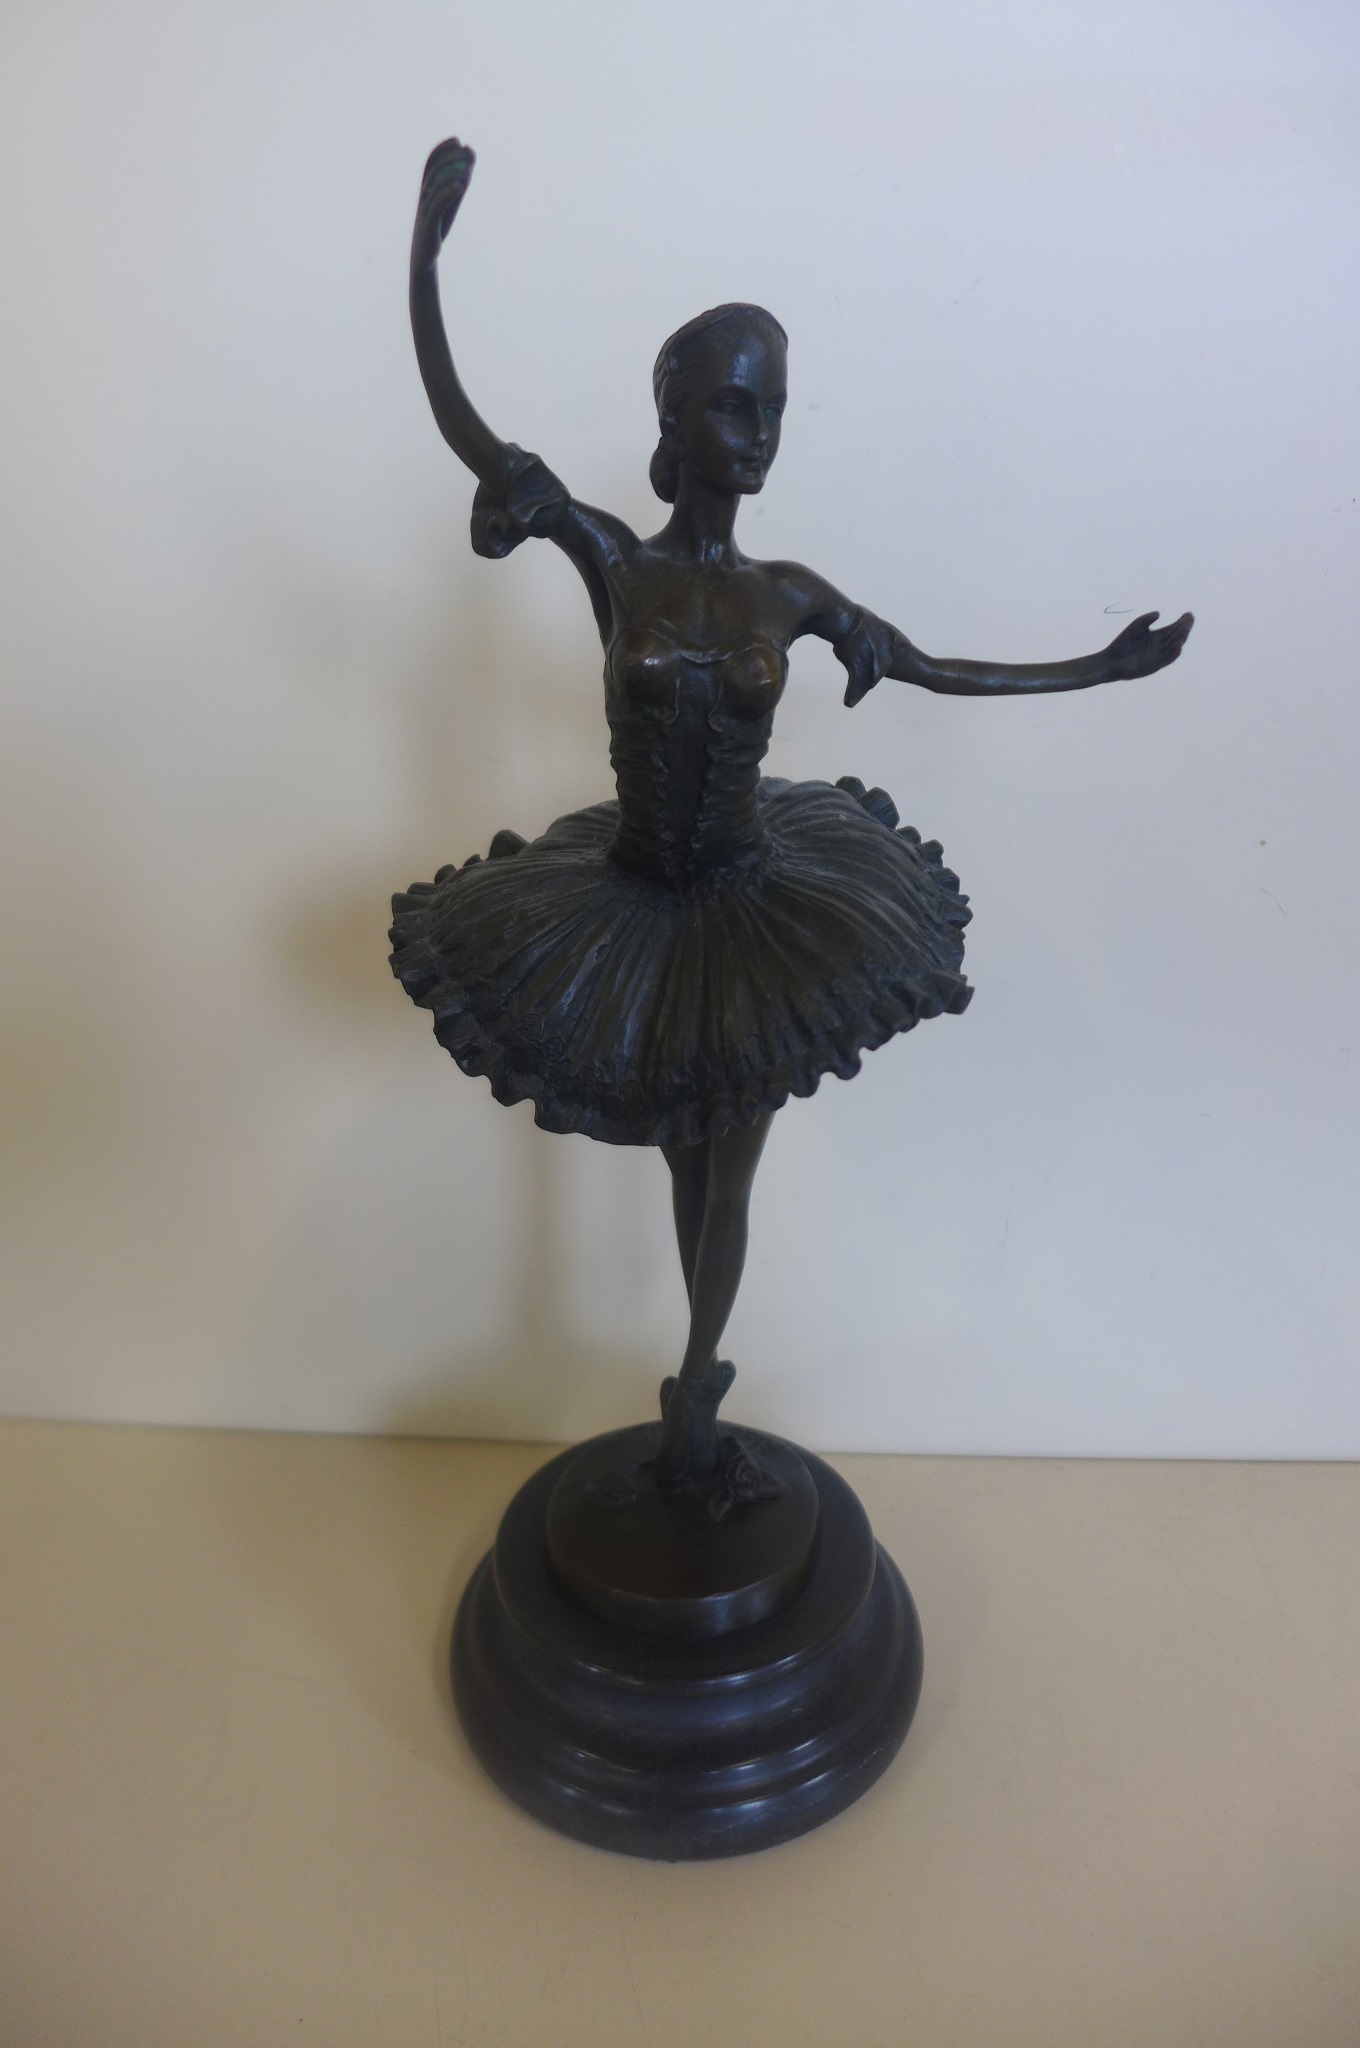 A modern bronze dancer figure - 30cm tall in good condition